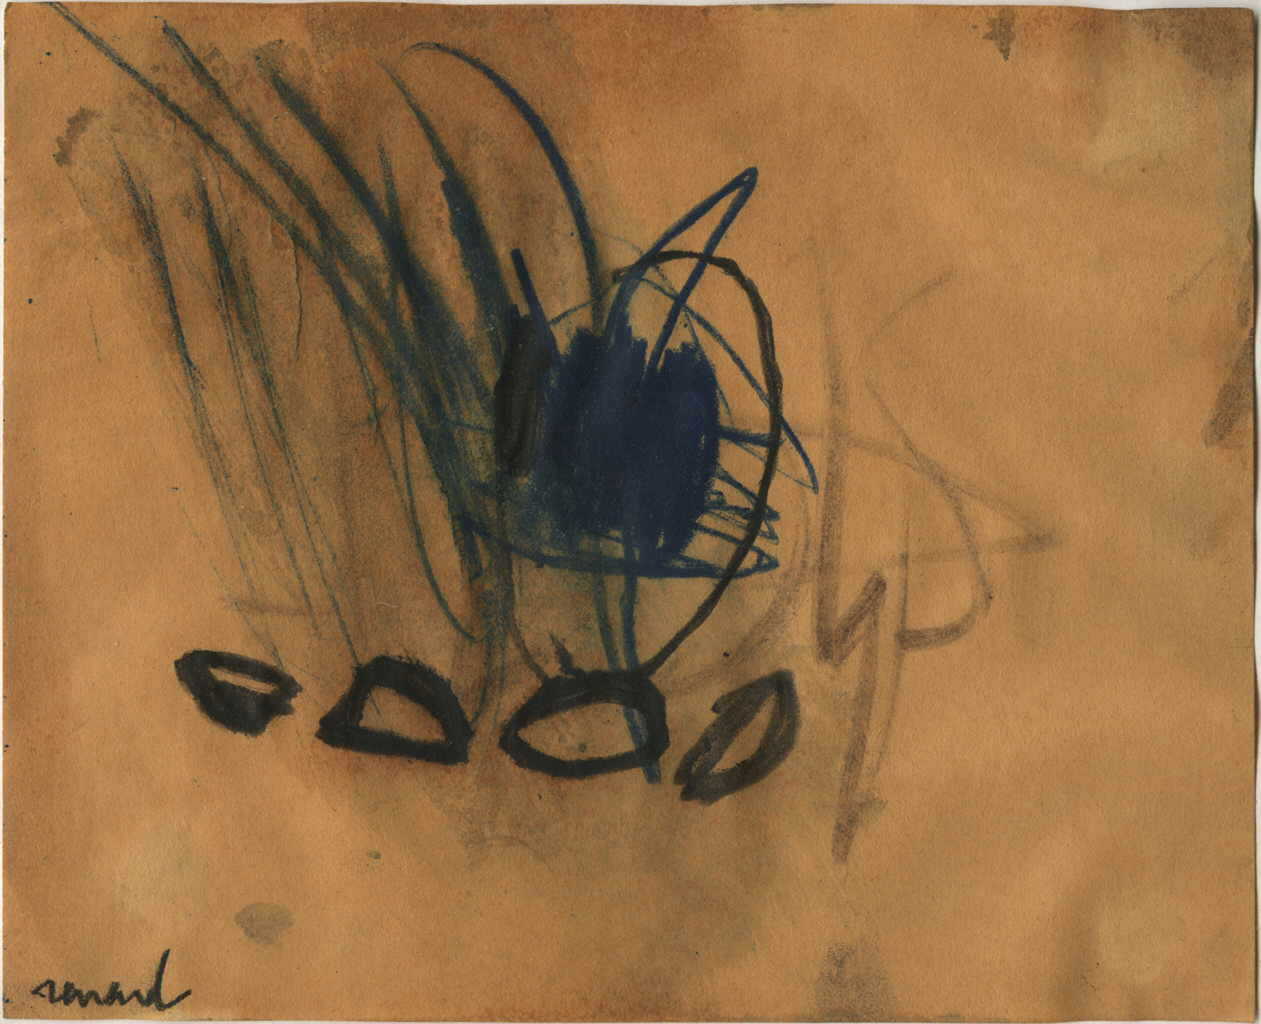 Renard Emmanuelle 
untitled, 1990
mixed media / paper
17 x 21 cm